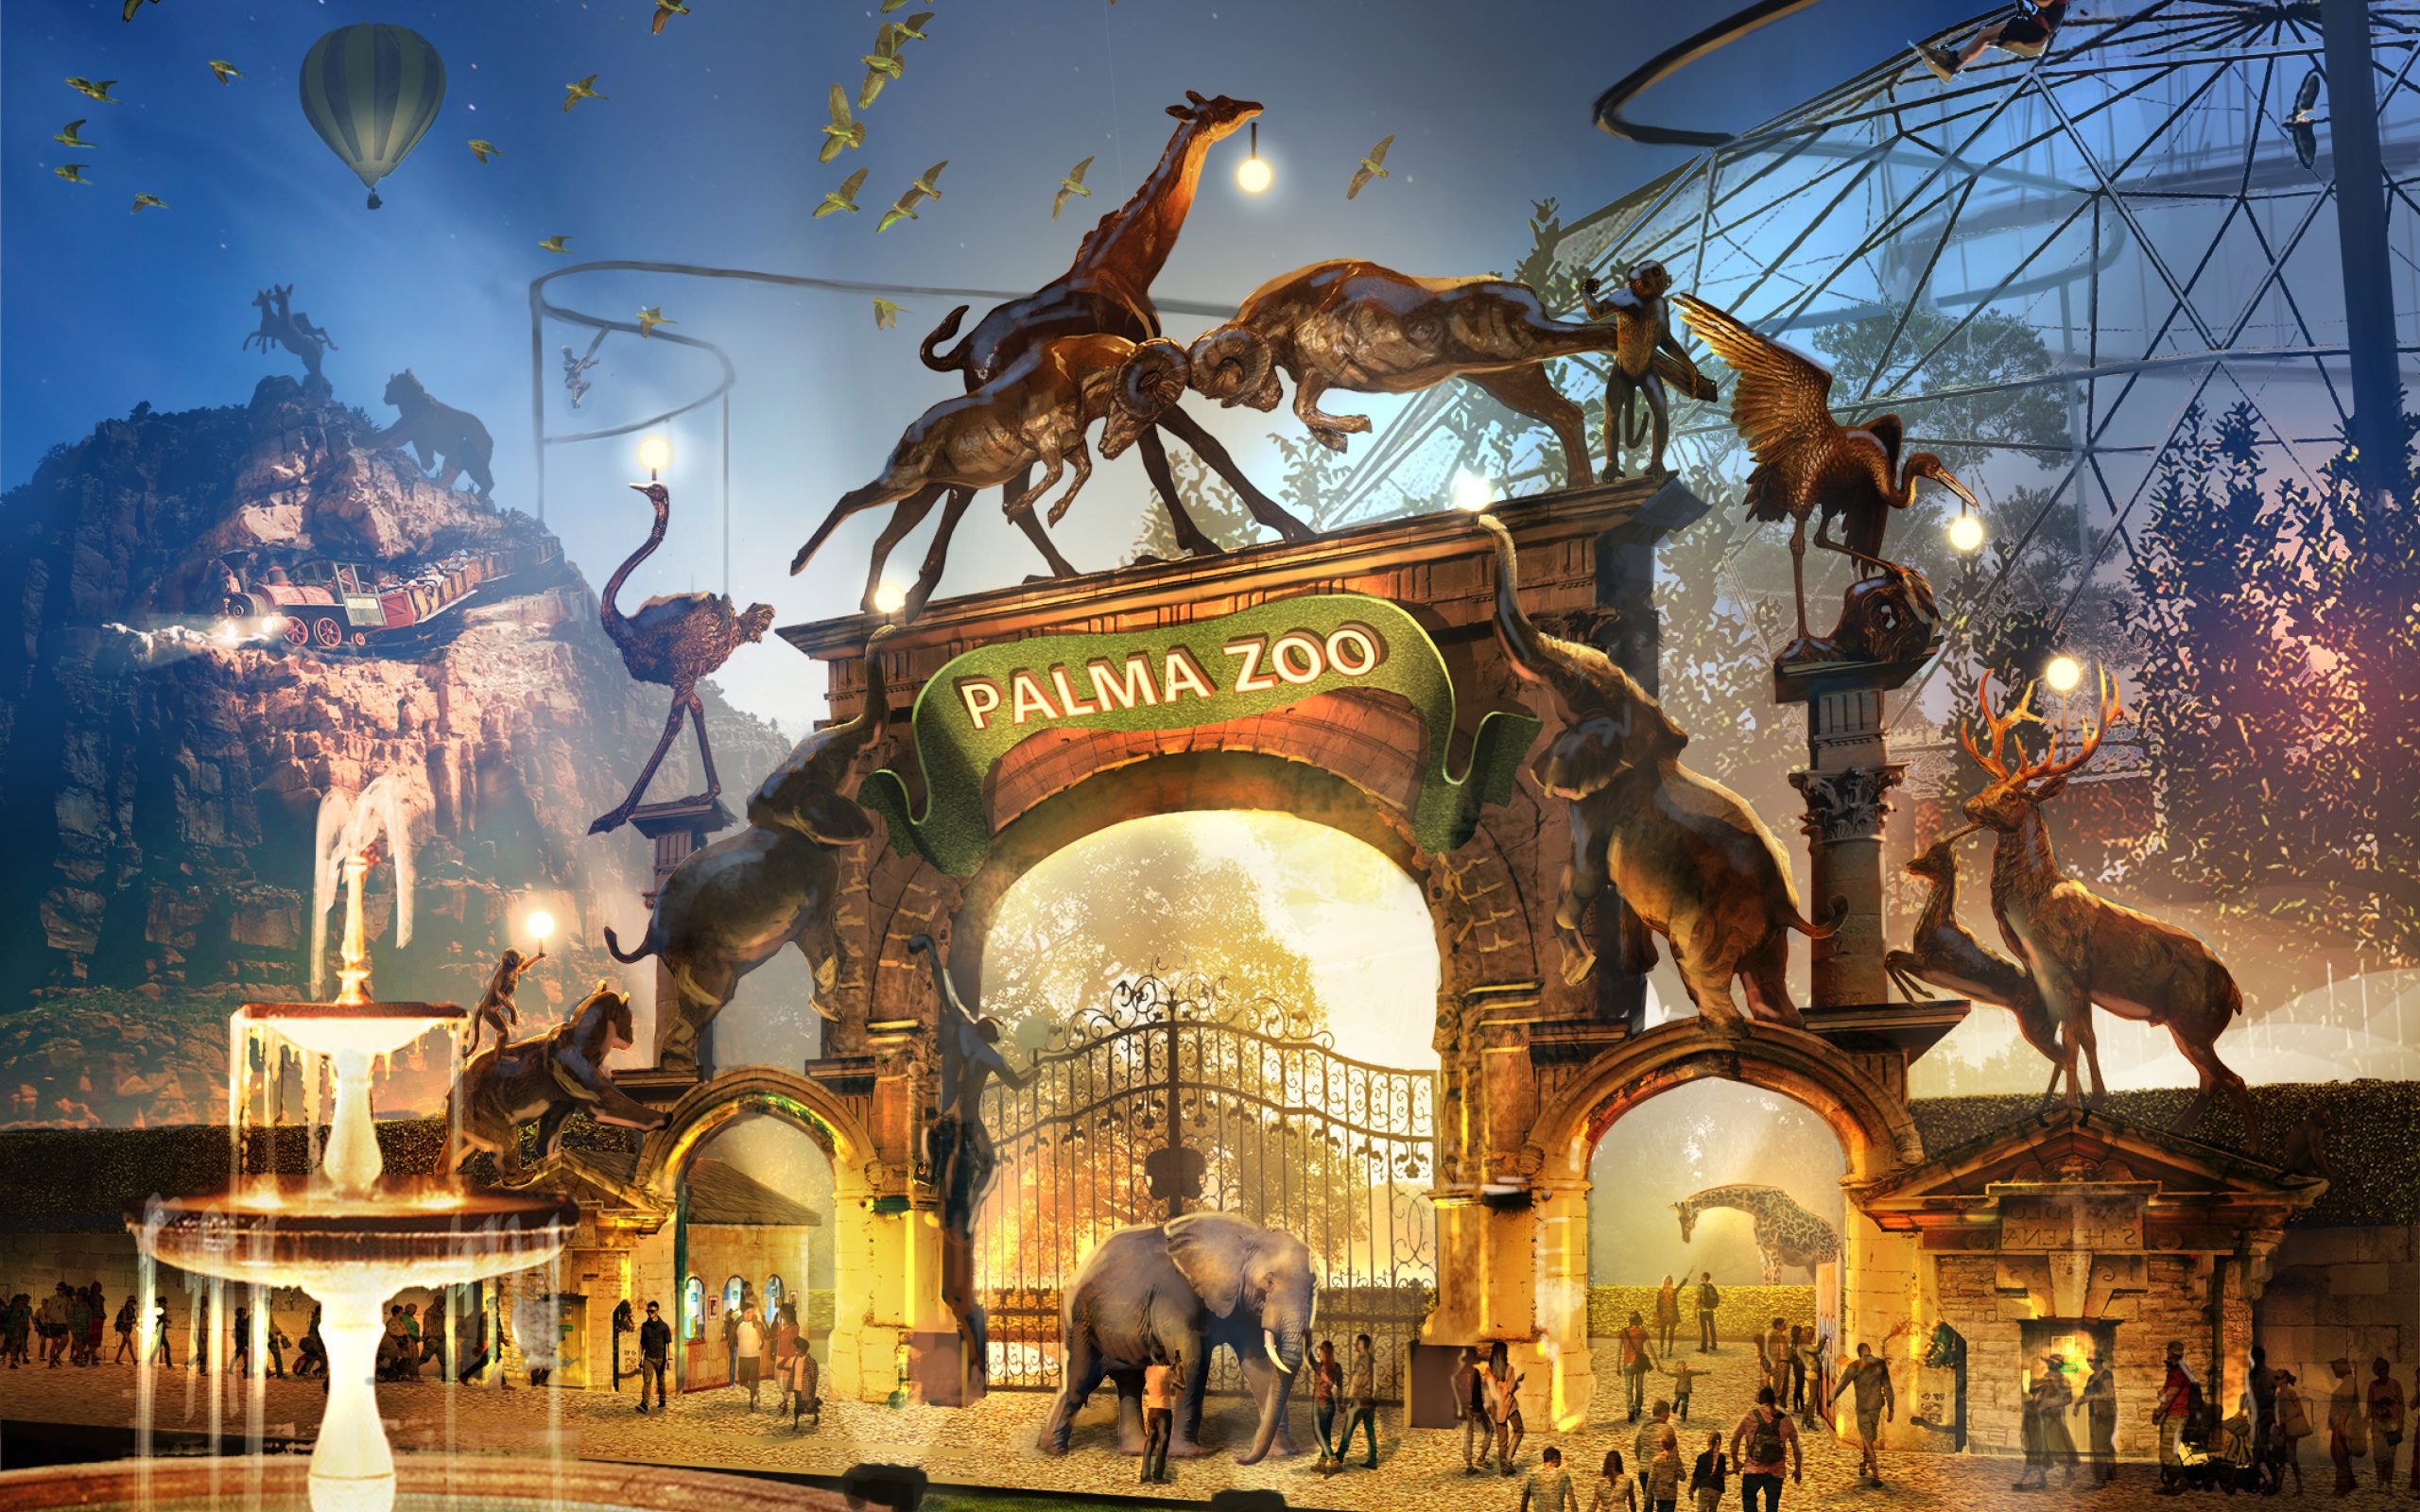 Palma zoo entrance way